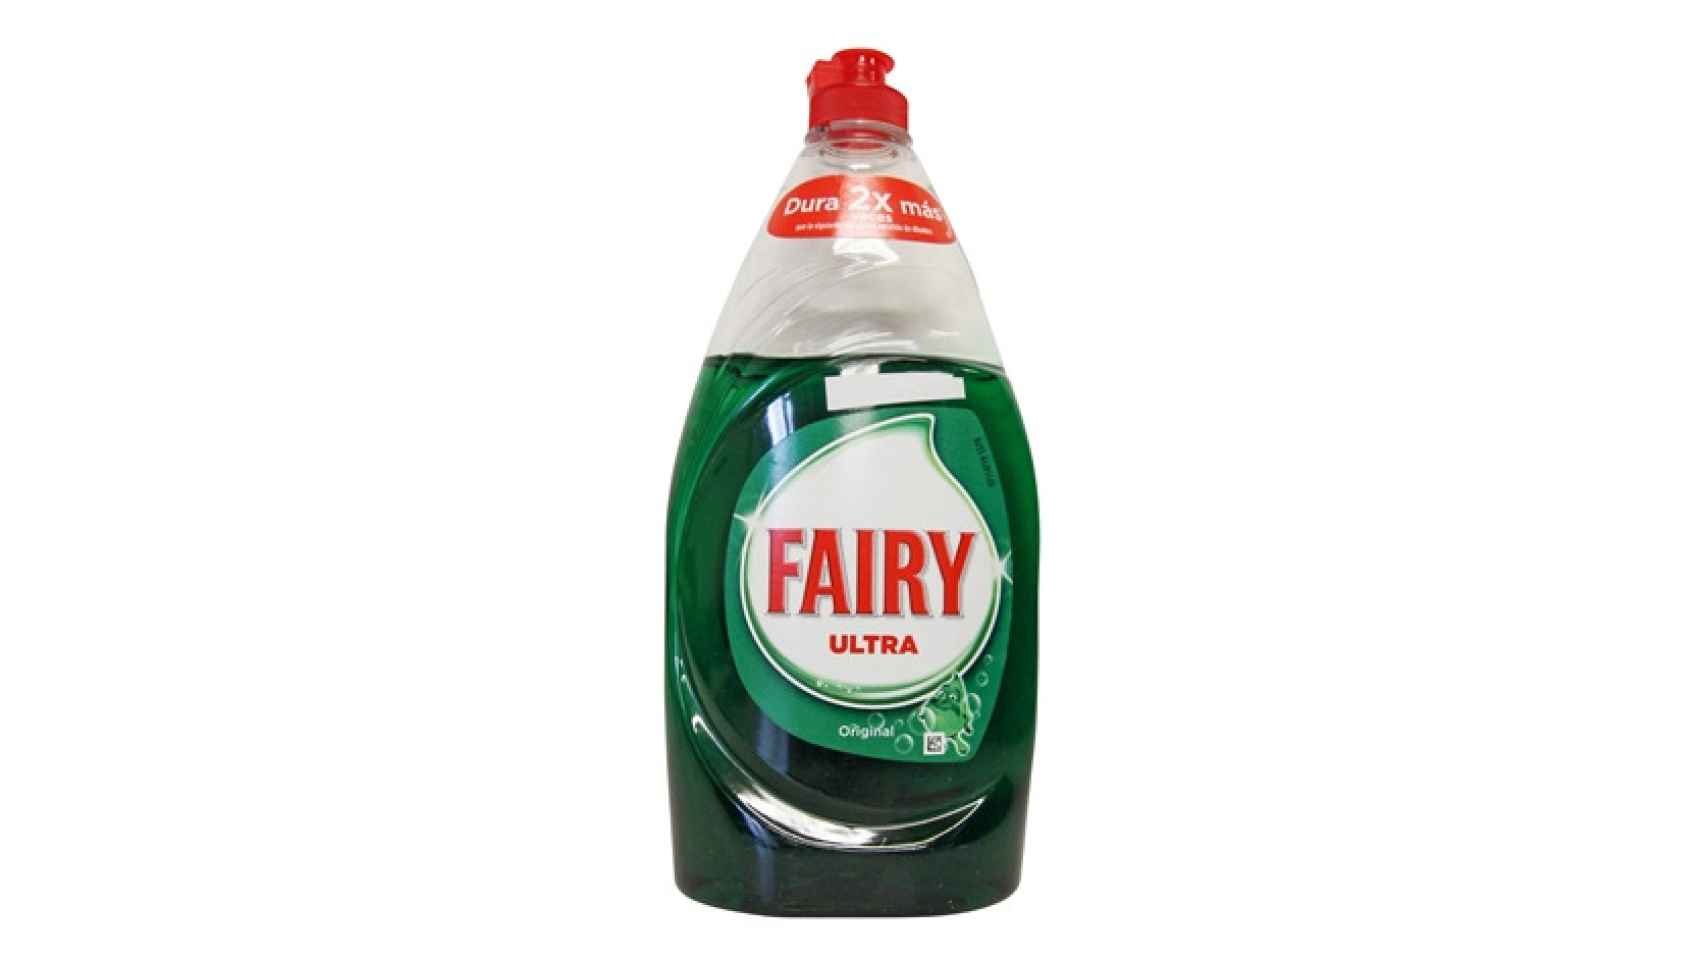 Fairy Limón Ultra Uso profesional concentrado mano de detergente